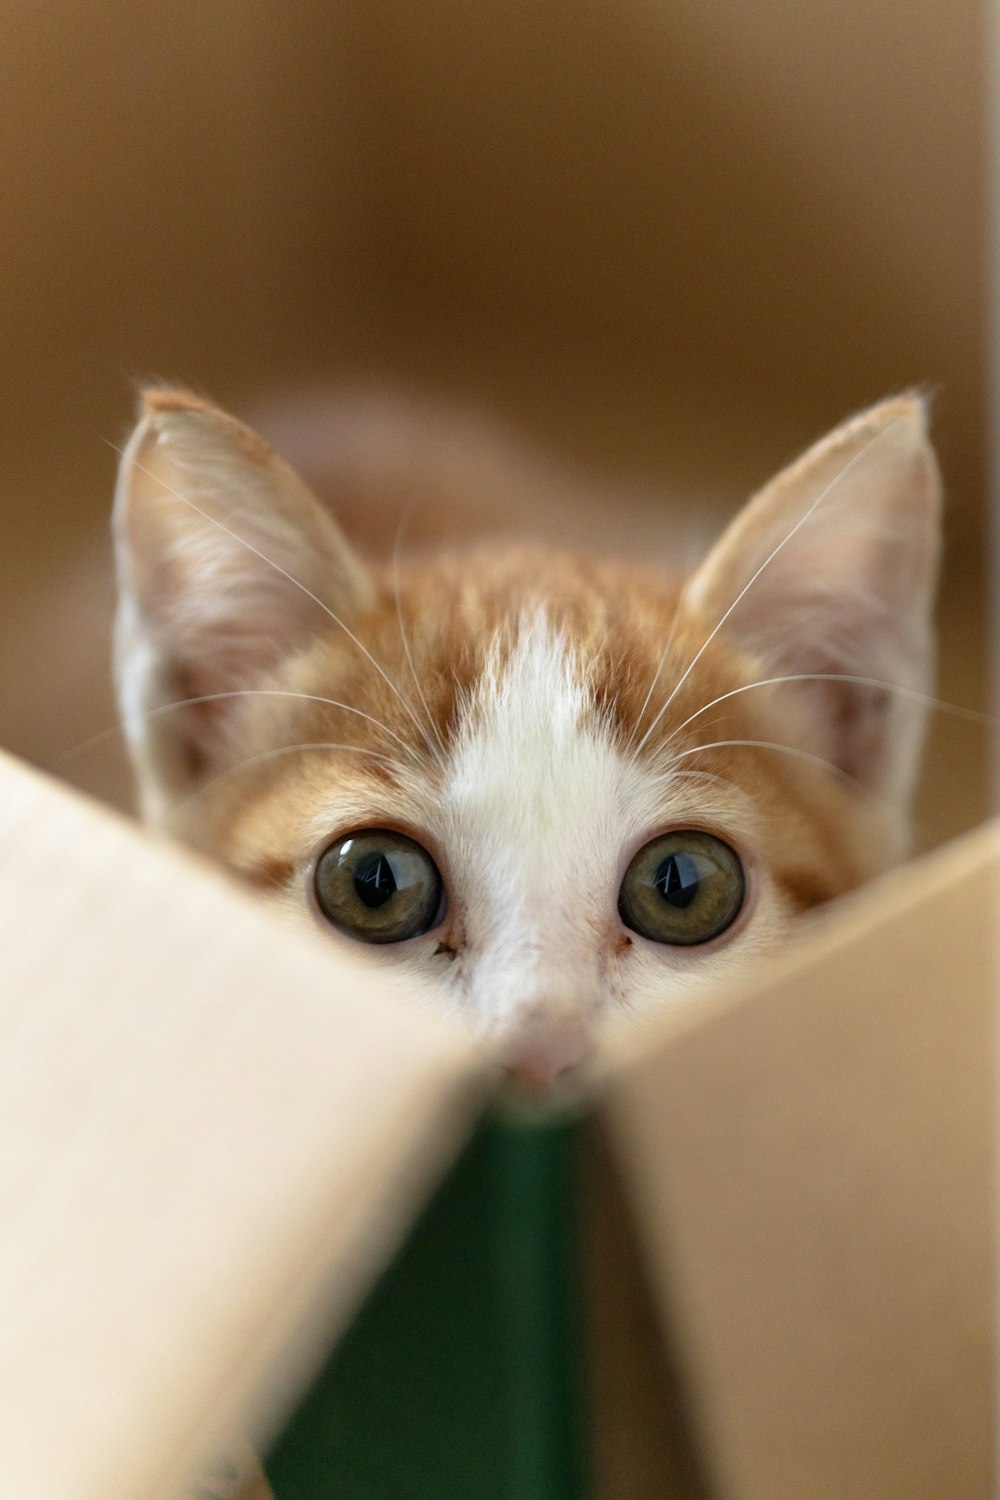 orange tabby cat on brown cardboard box